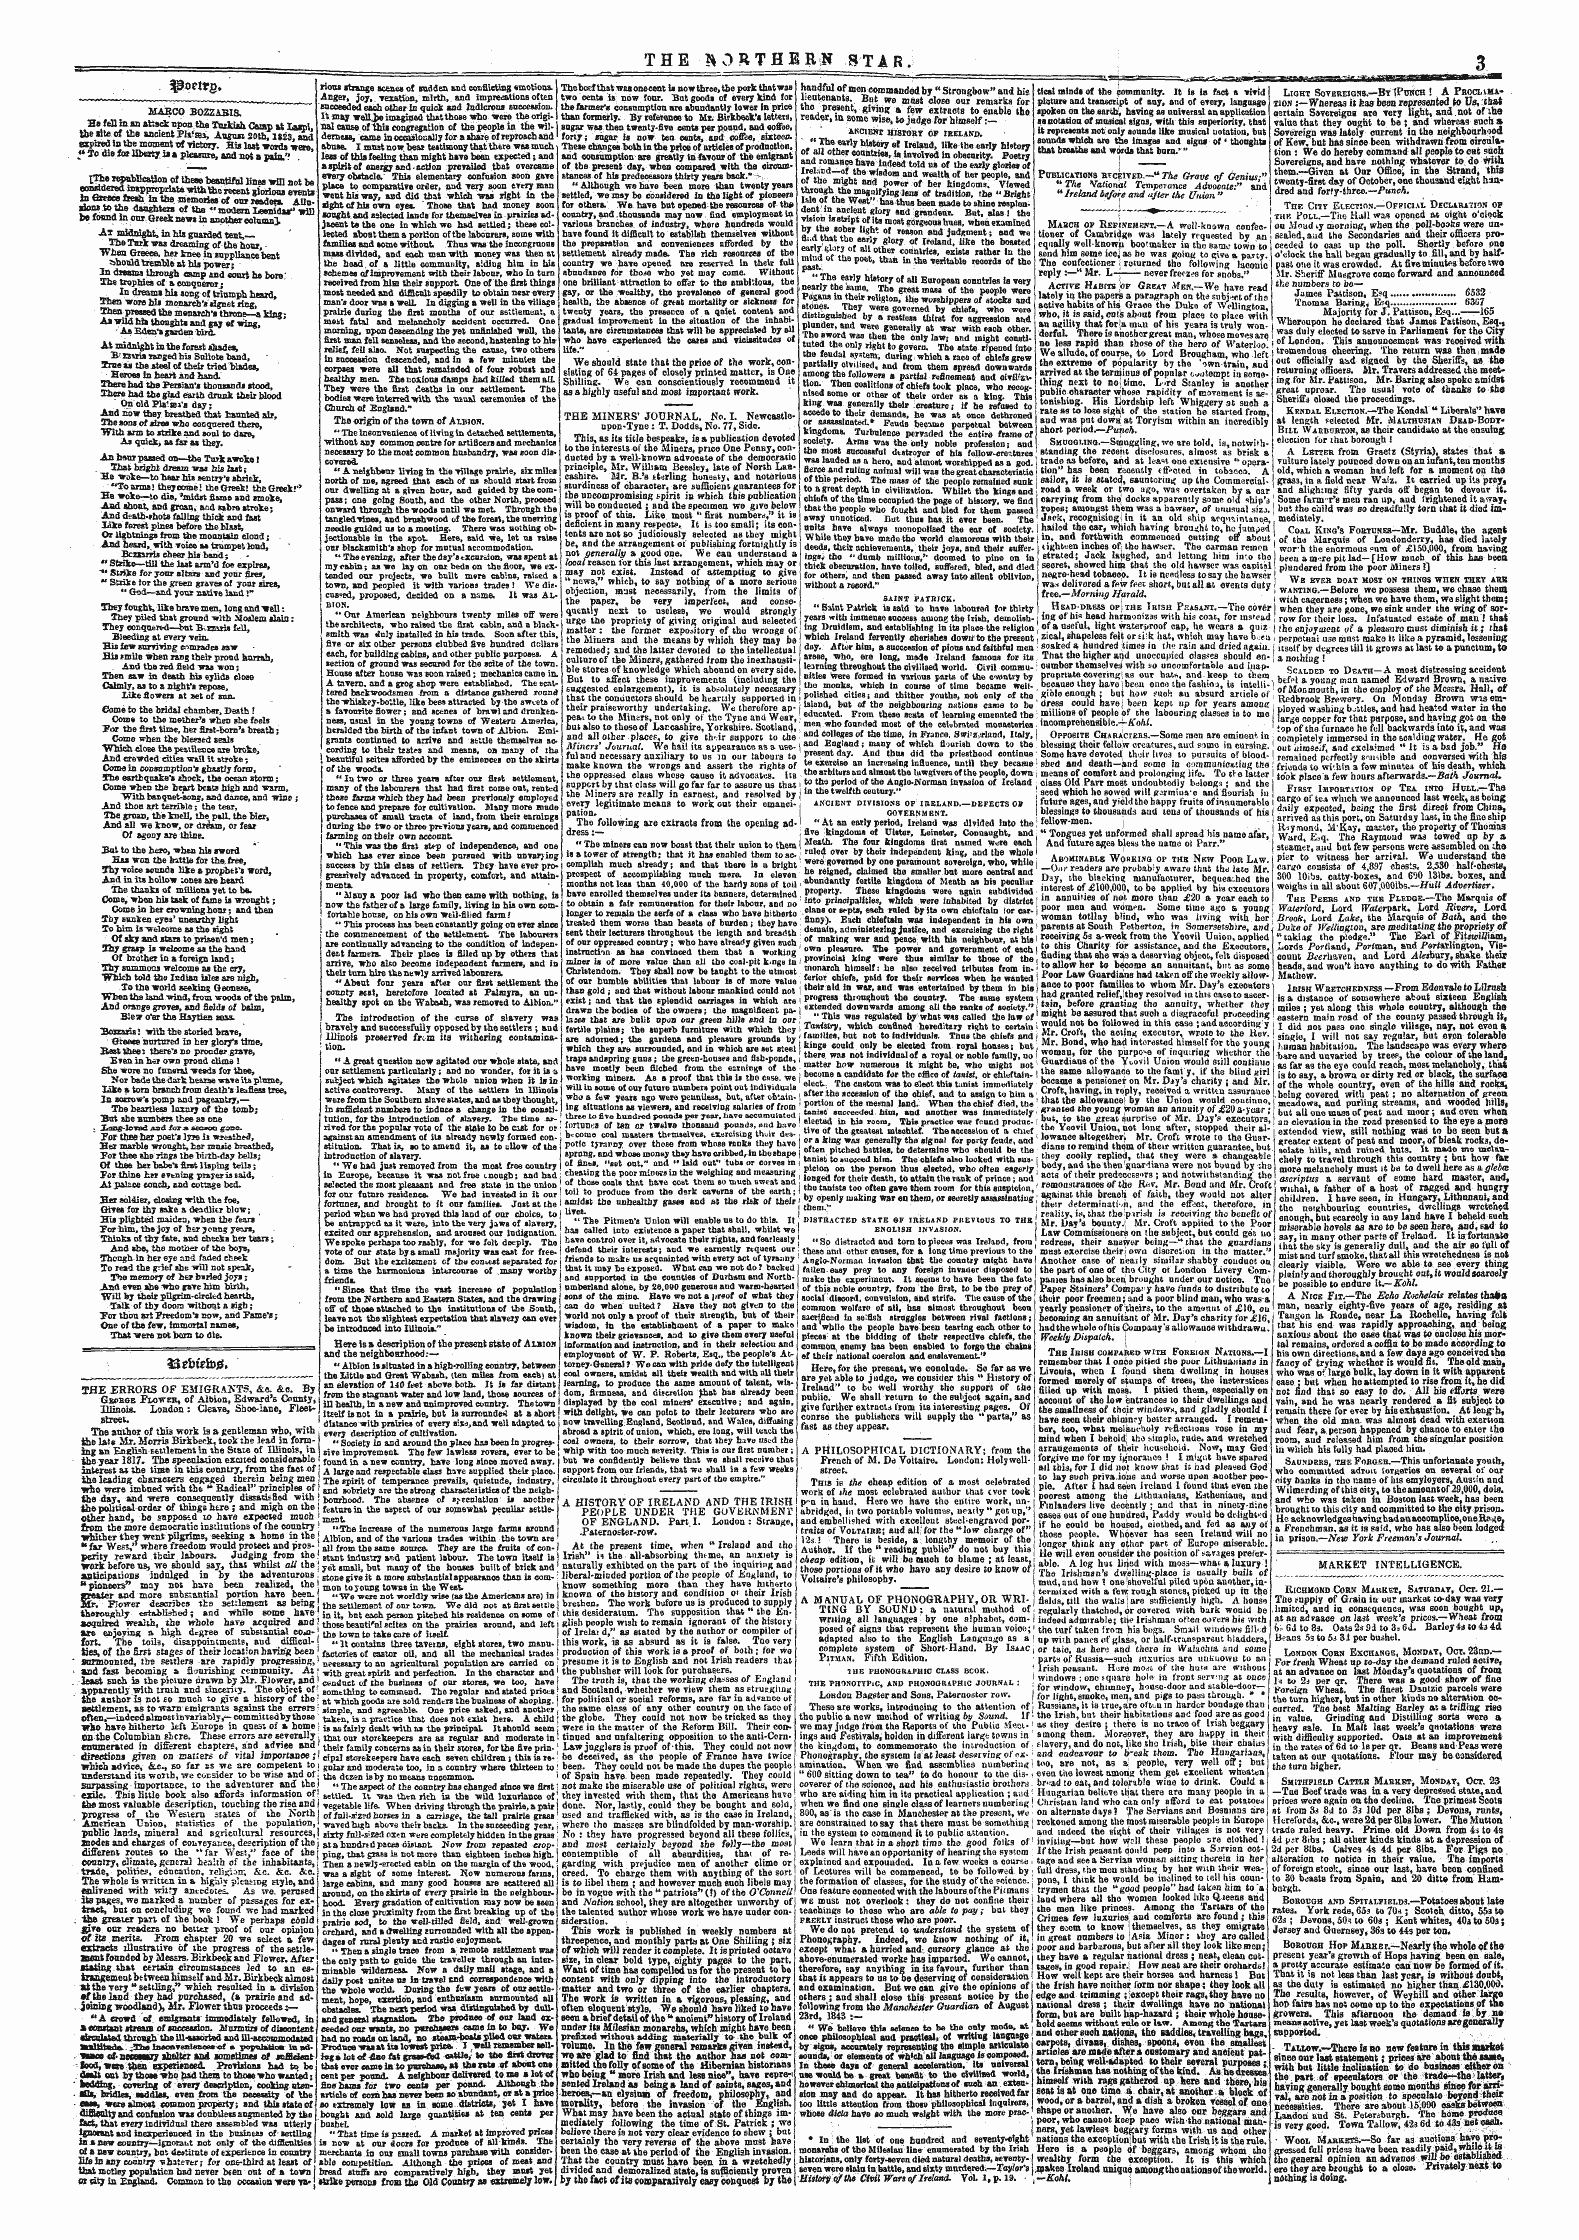 Northern Star (1837-1852): jS F Y, 4th edition - S&Otttd